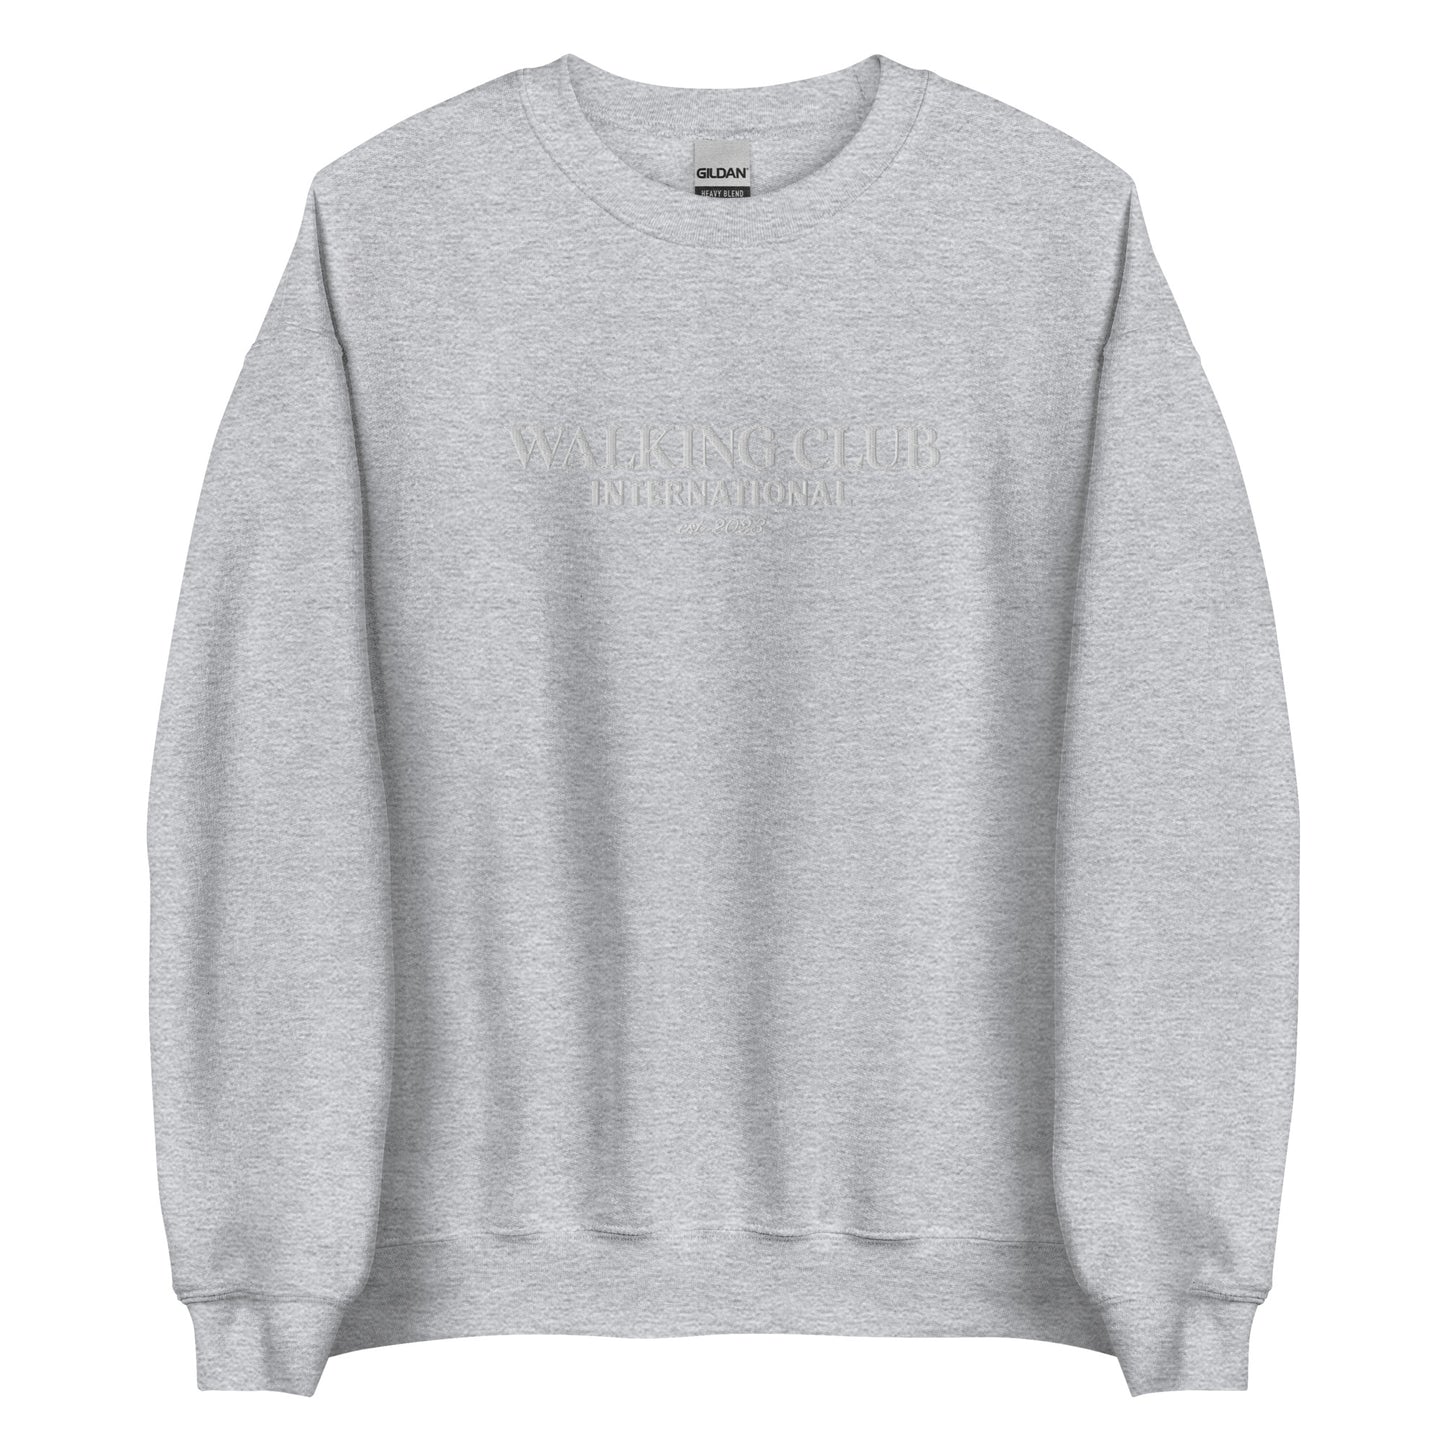 Embroidered Walking Club International Sweatshirt